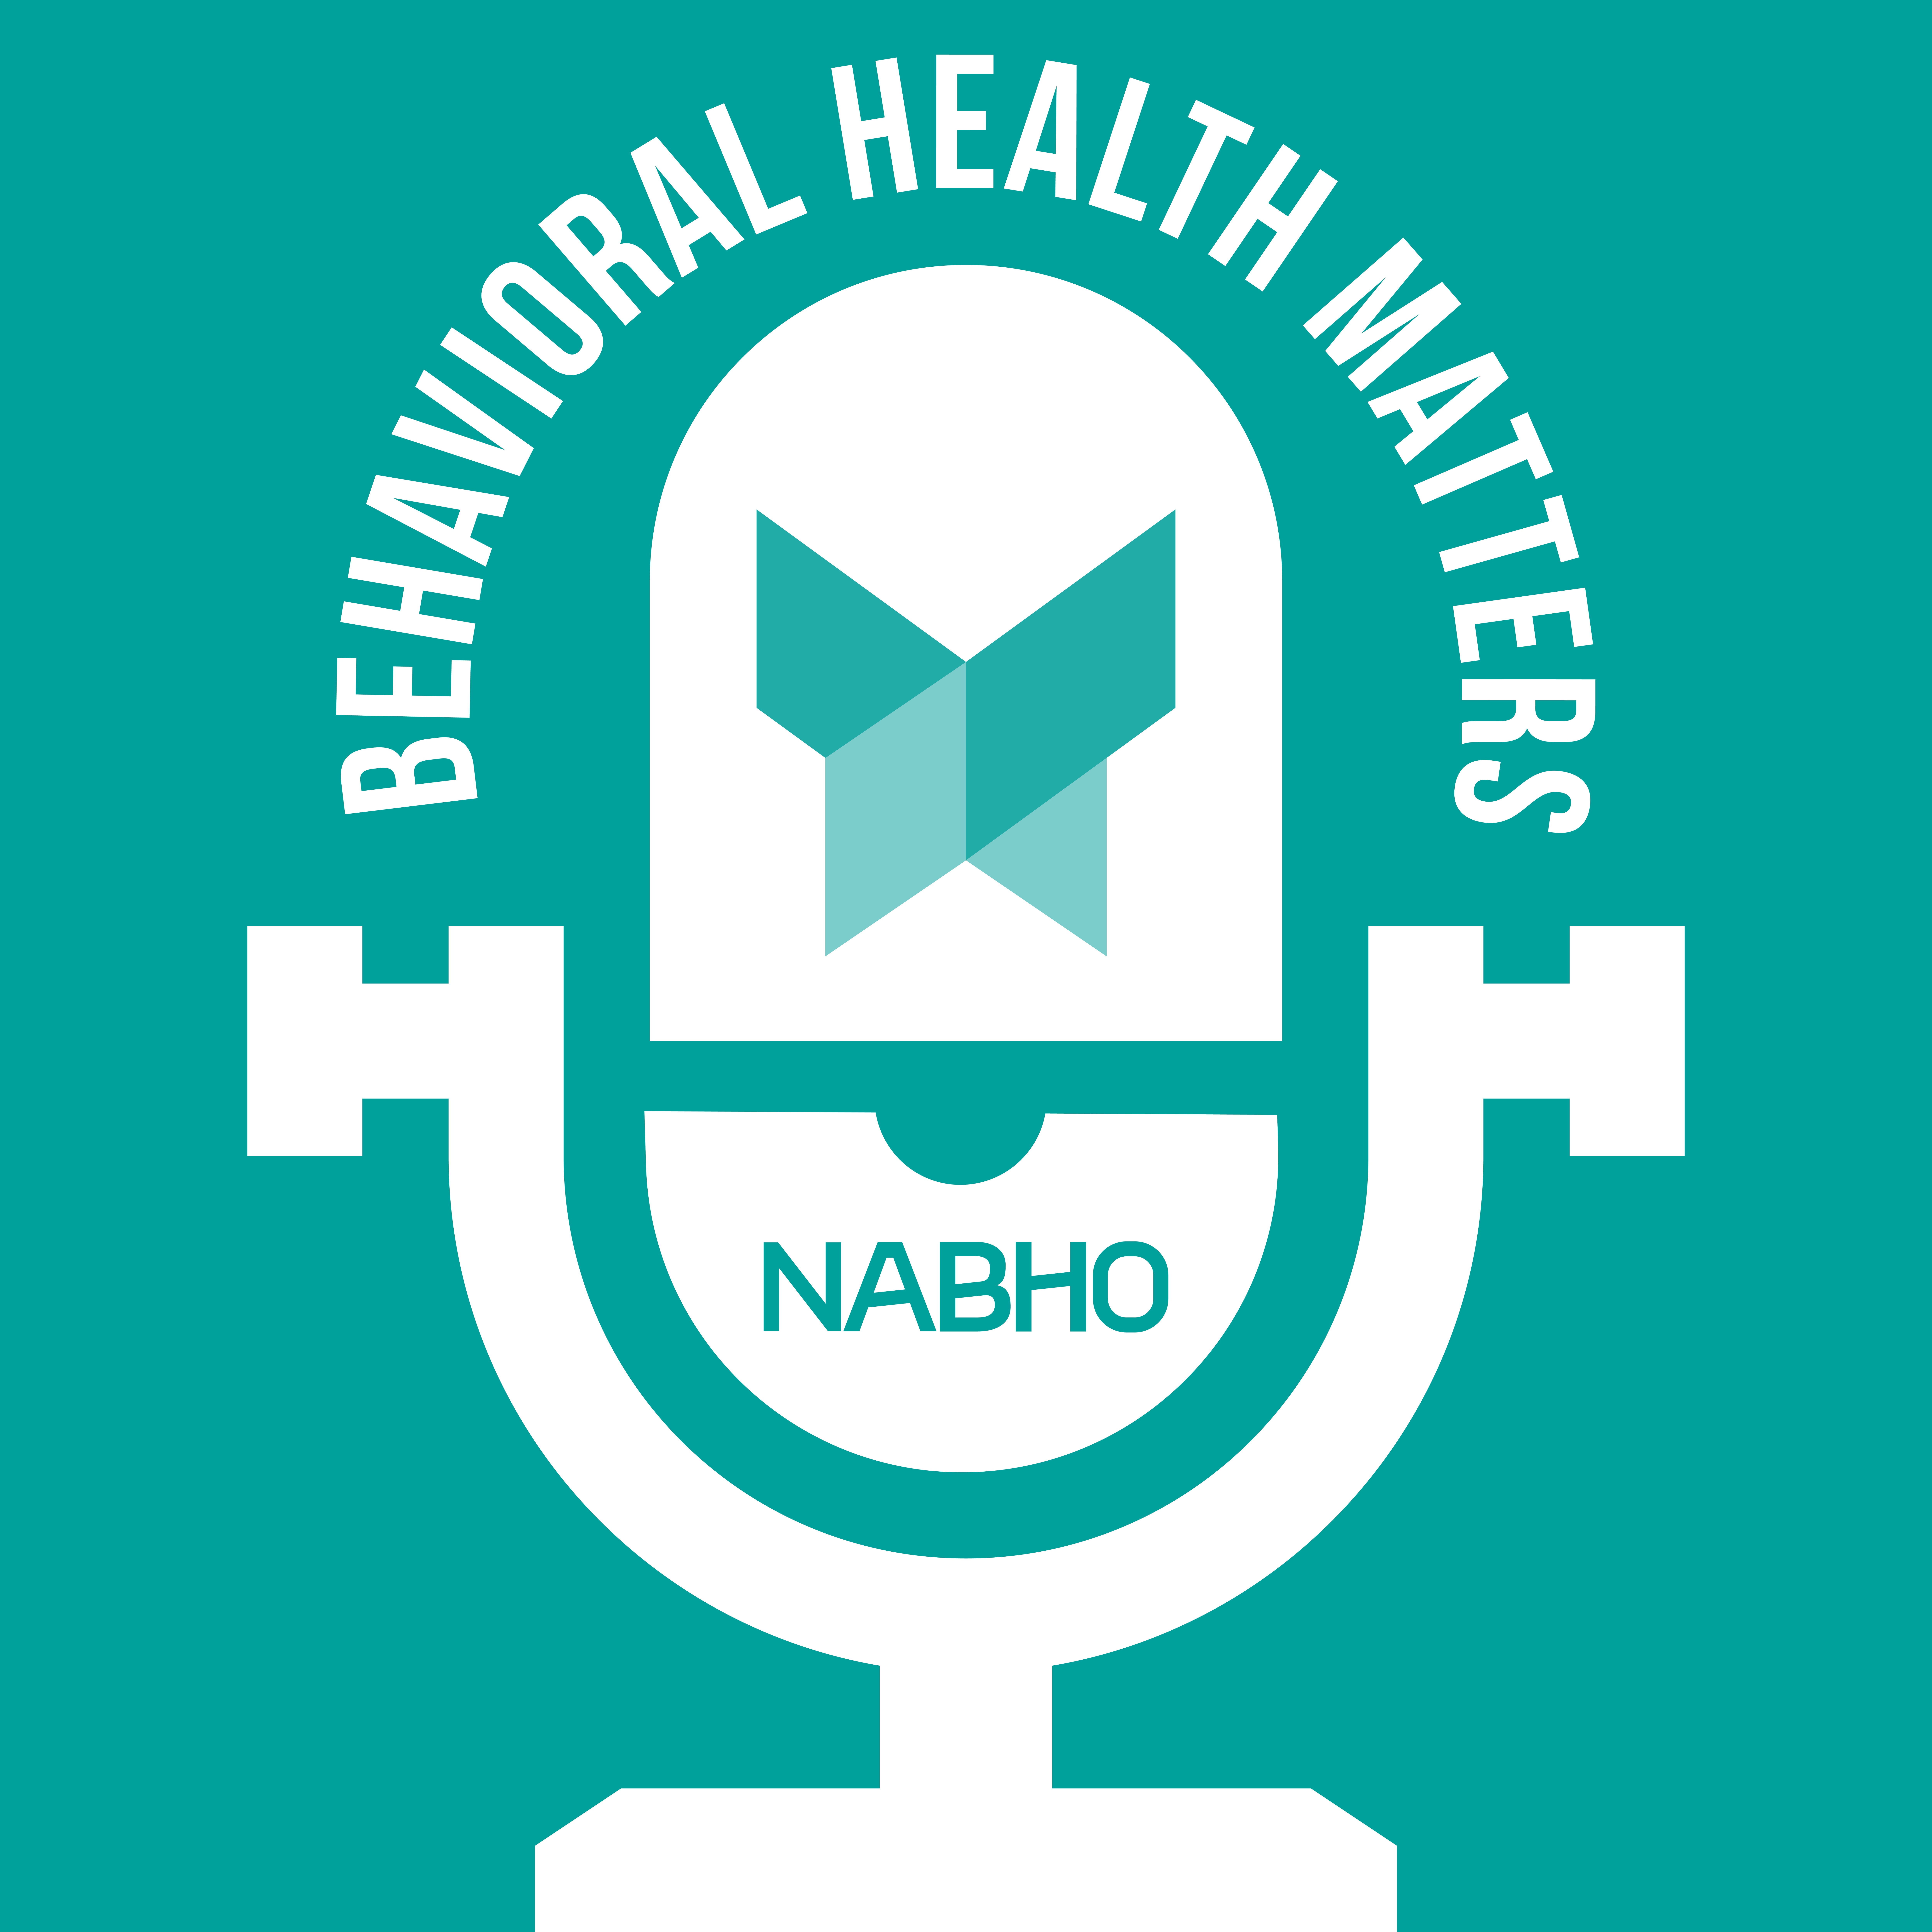 NABHO Podcast: Behavioral Health Matters!